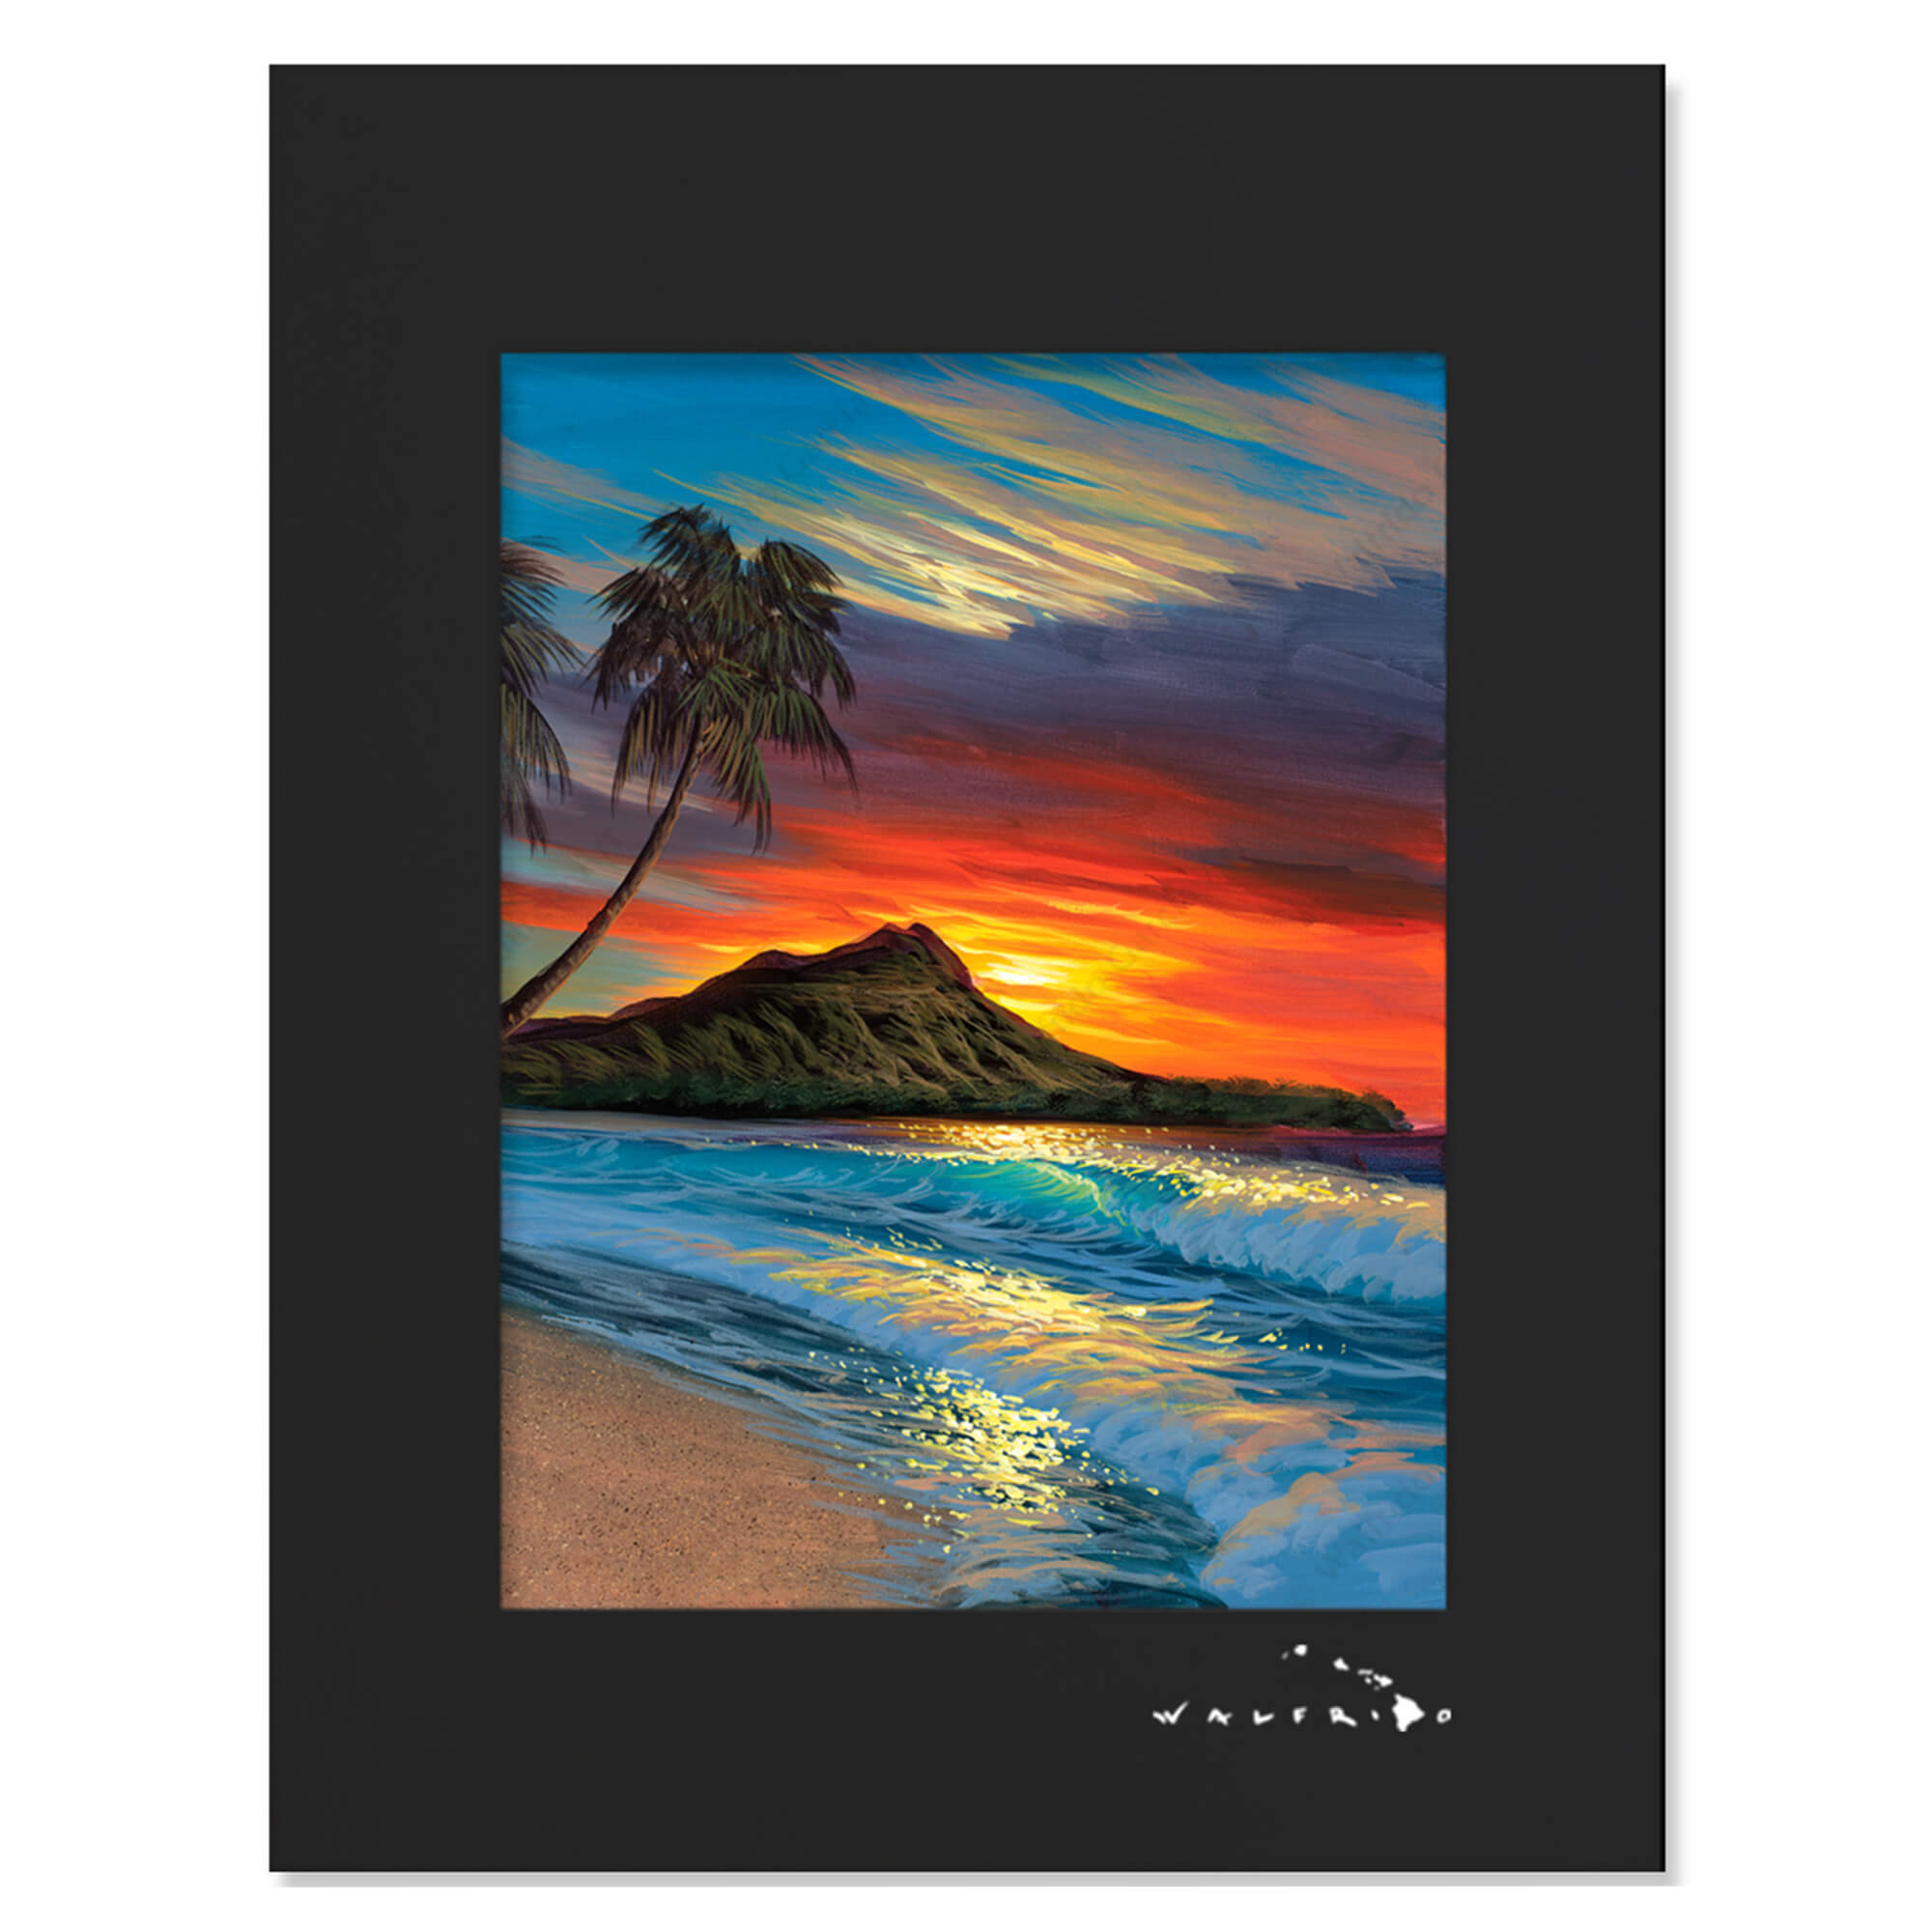 Colorful sky above Diamond Head by Hawaii artist Walfrido Garcia